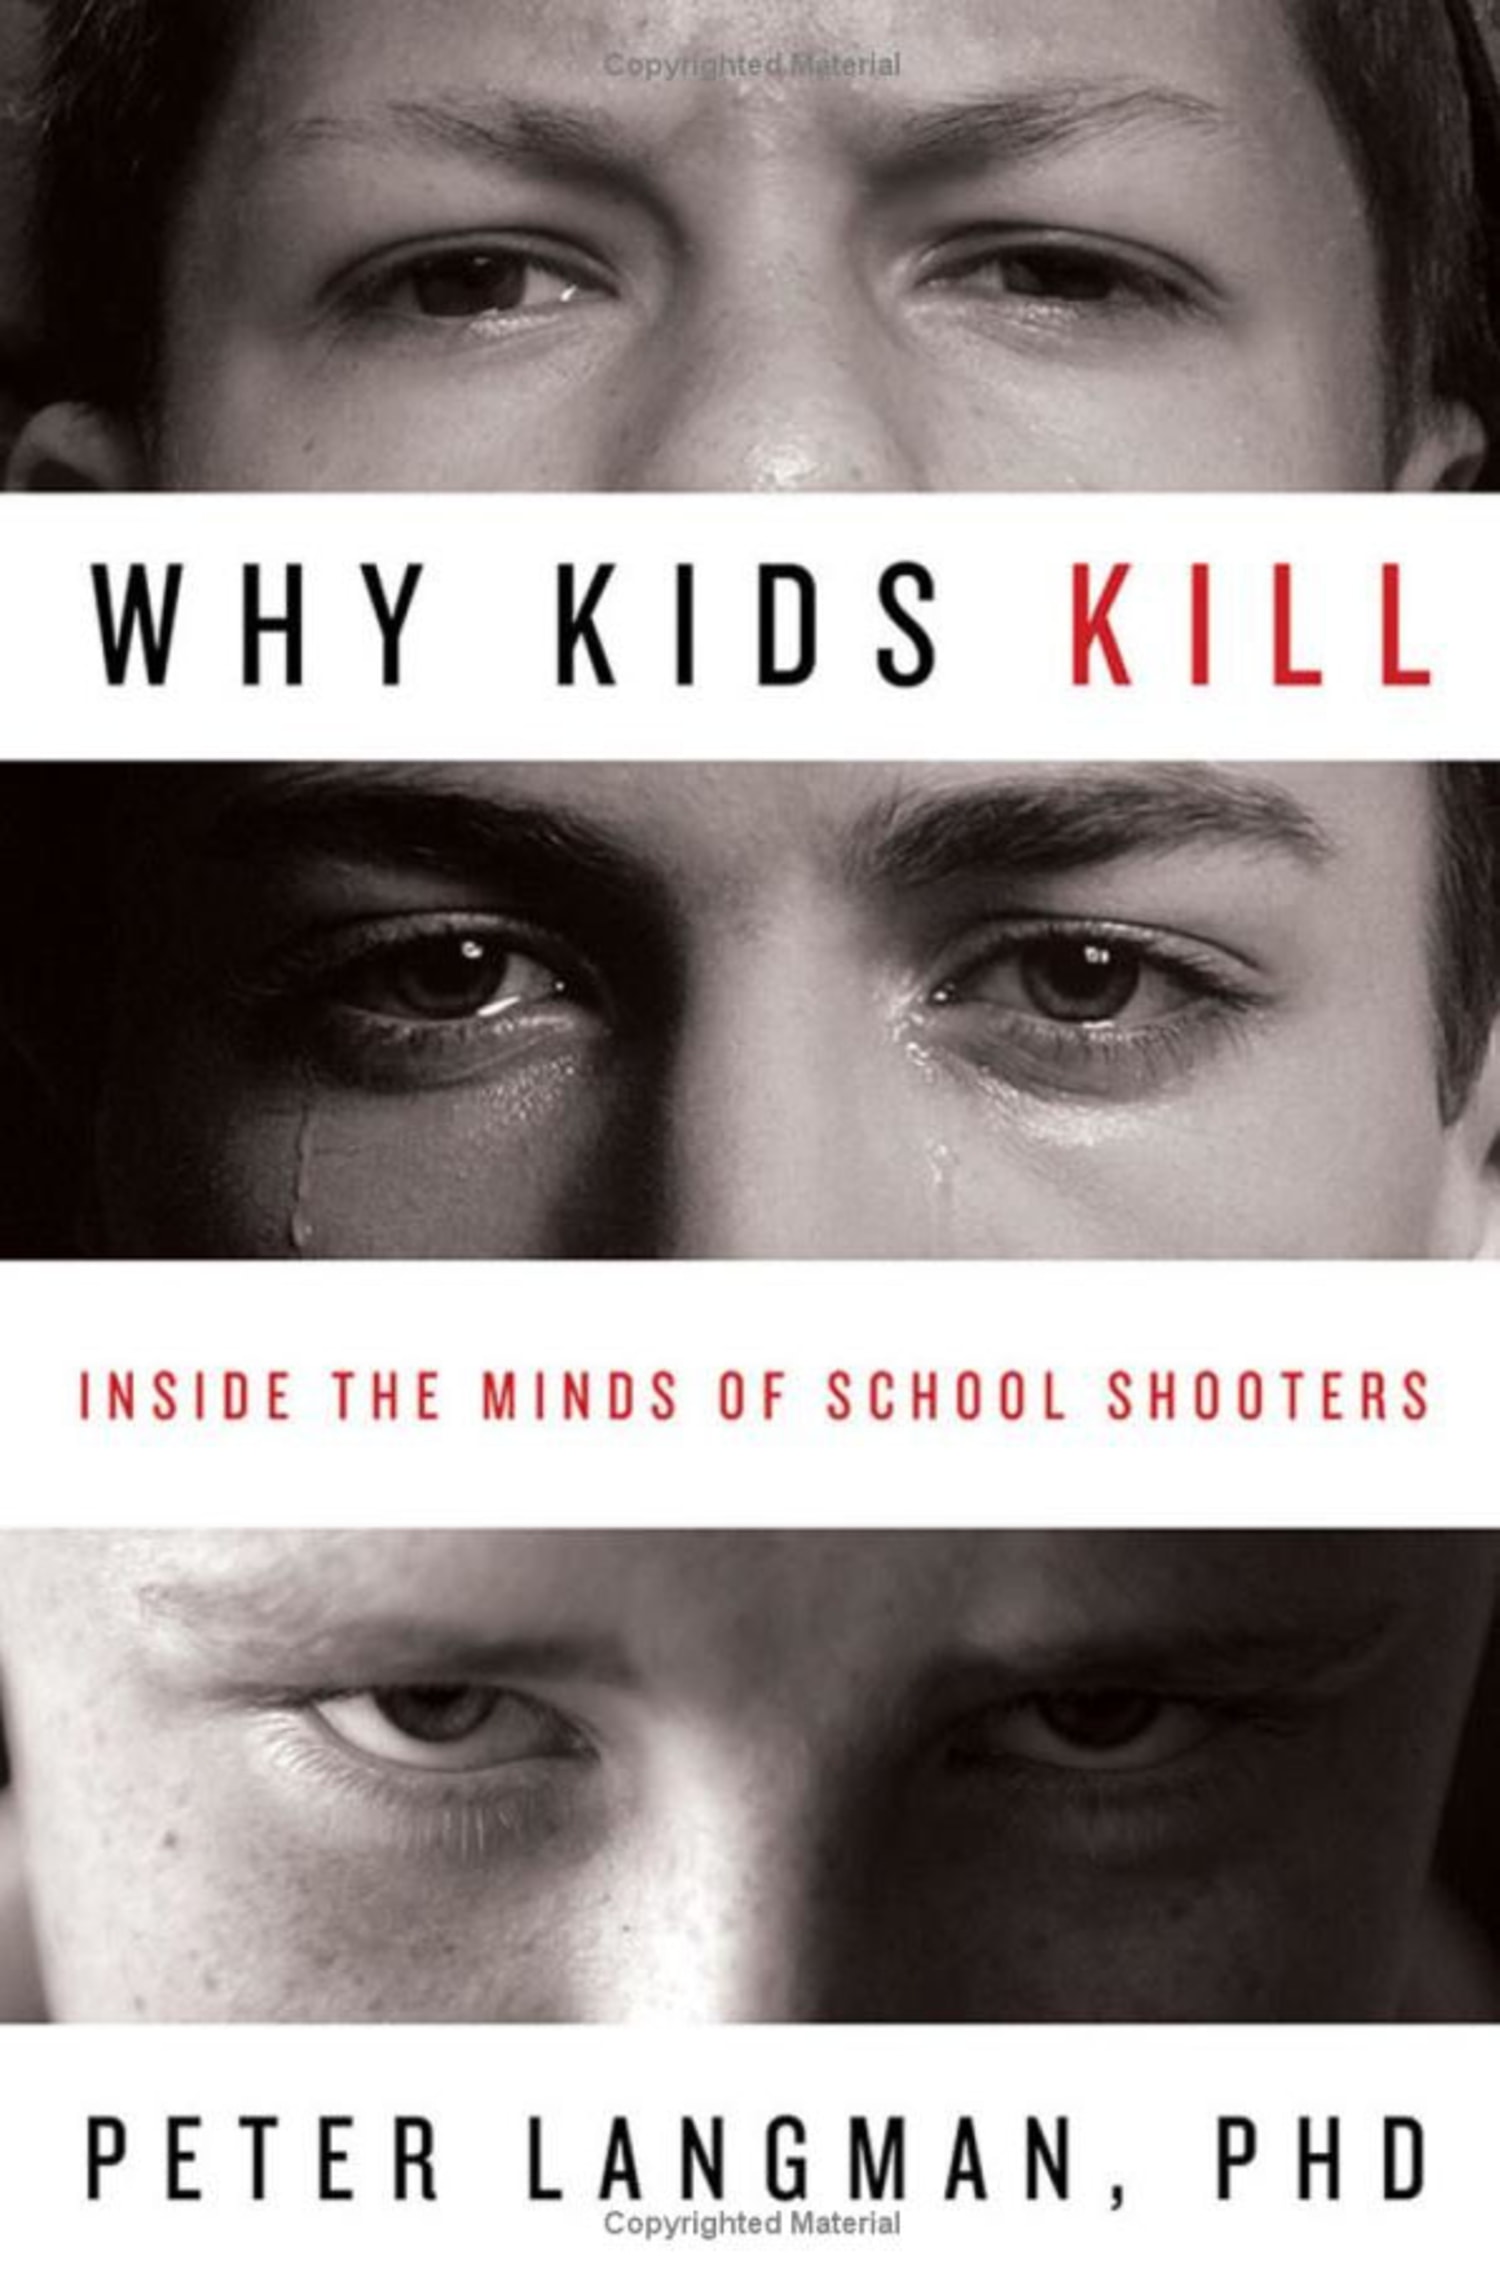 Why do kids kill? Book investigates